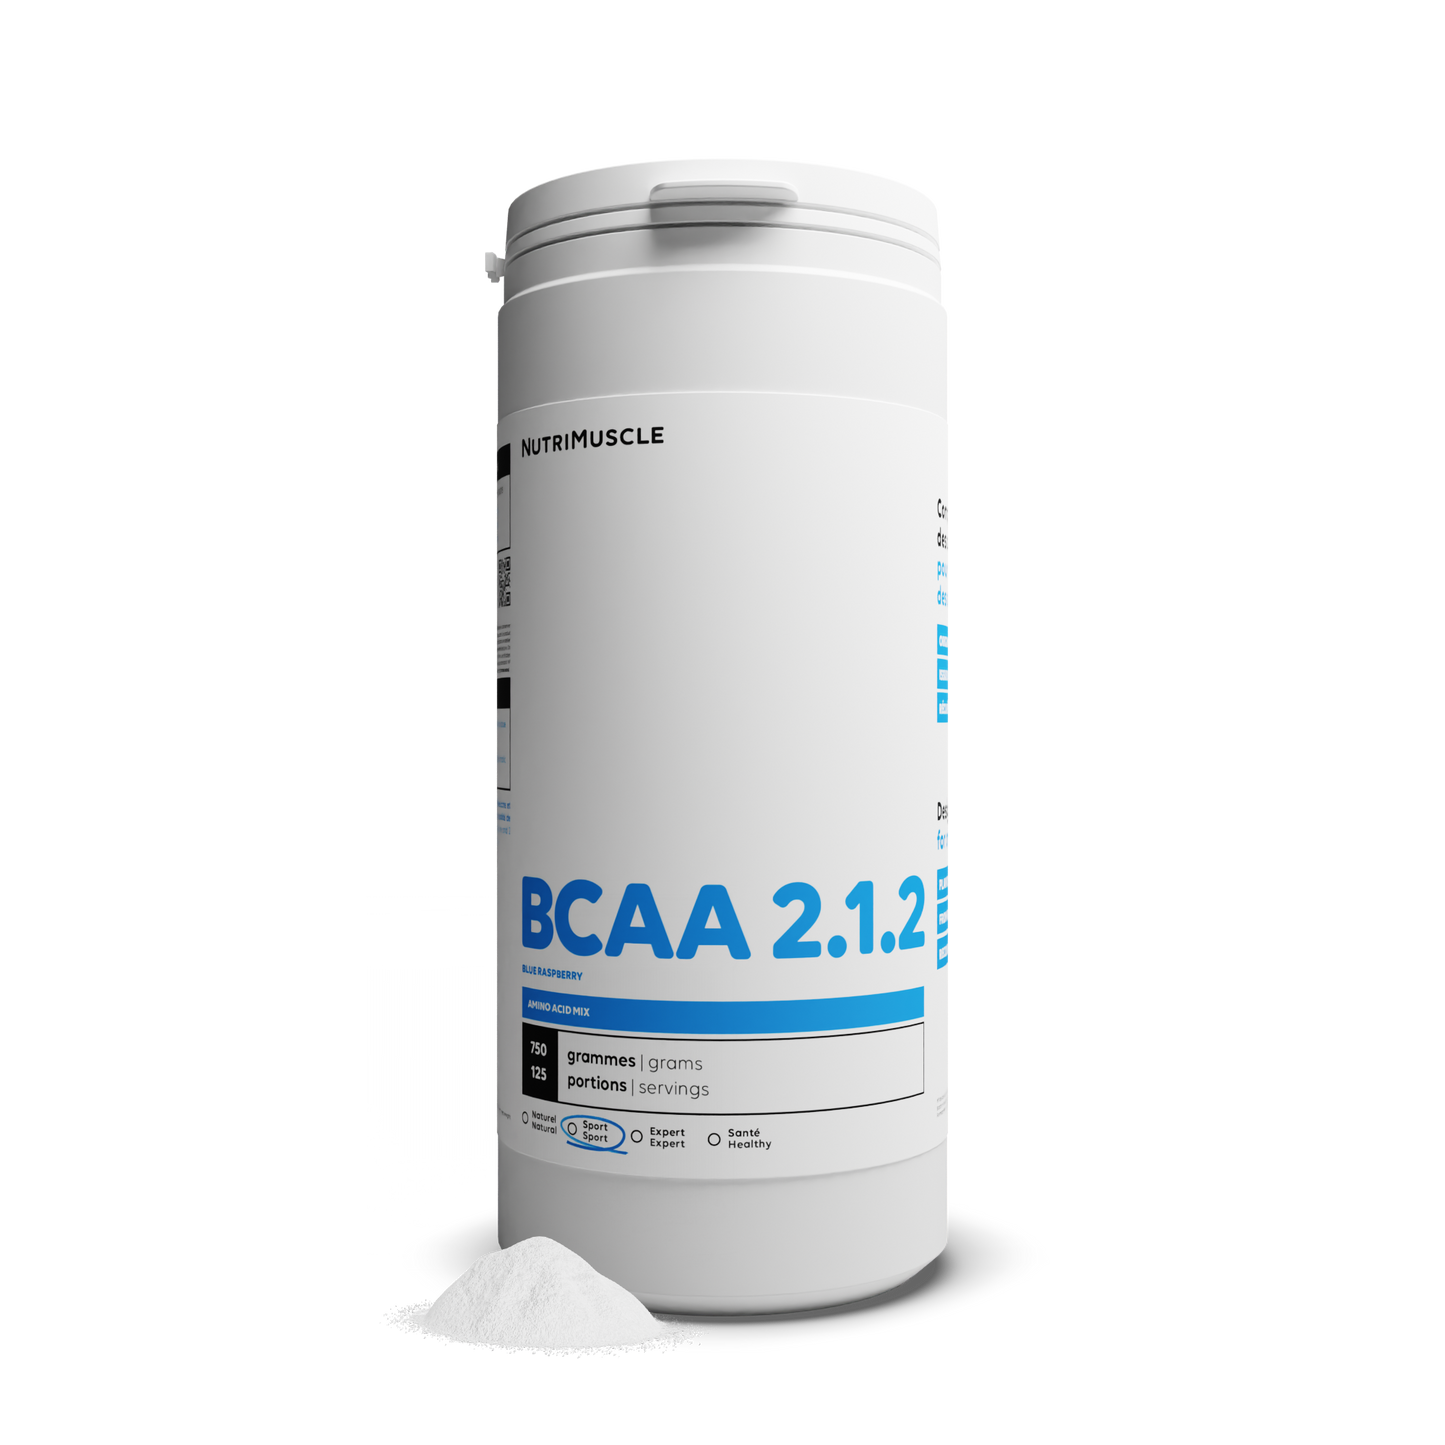 BCAA 2.1.2 Powder resistance